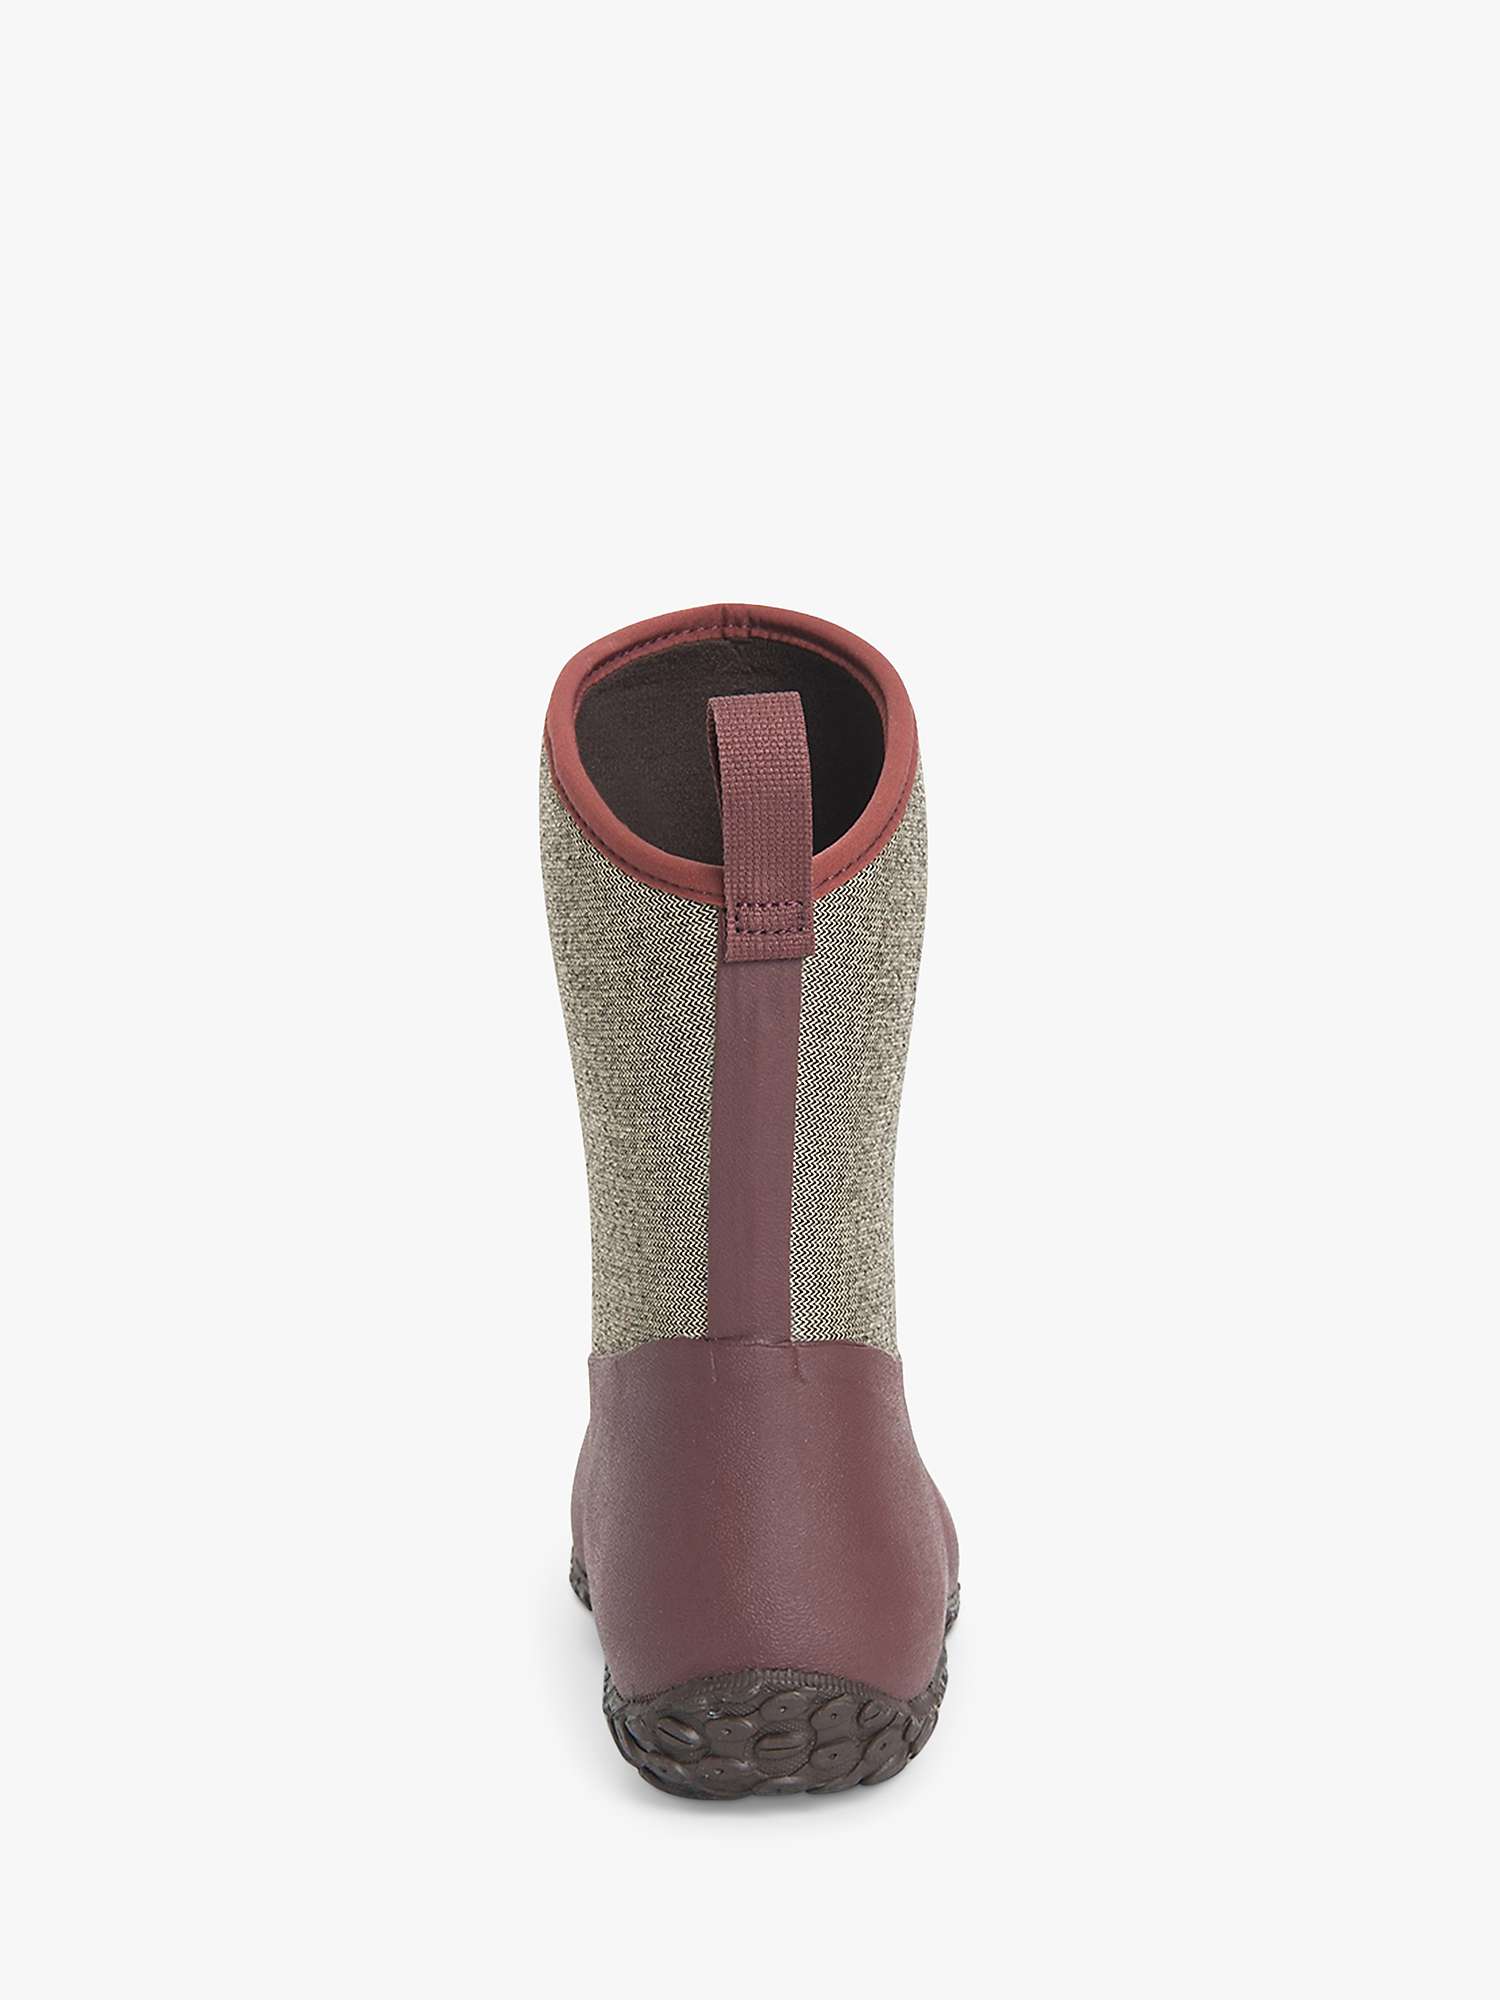 Buy Muck Muckster II Short Boots, Raisin Online at johnlewis.com